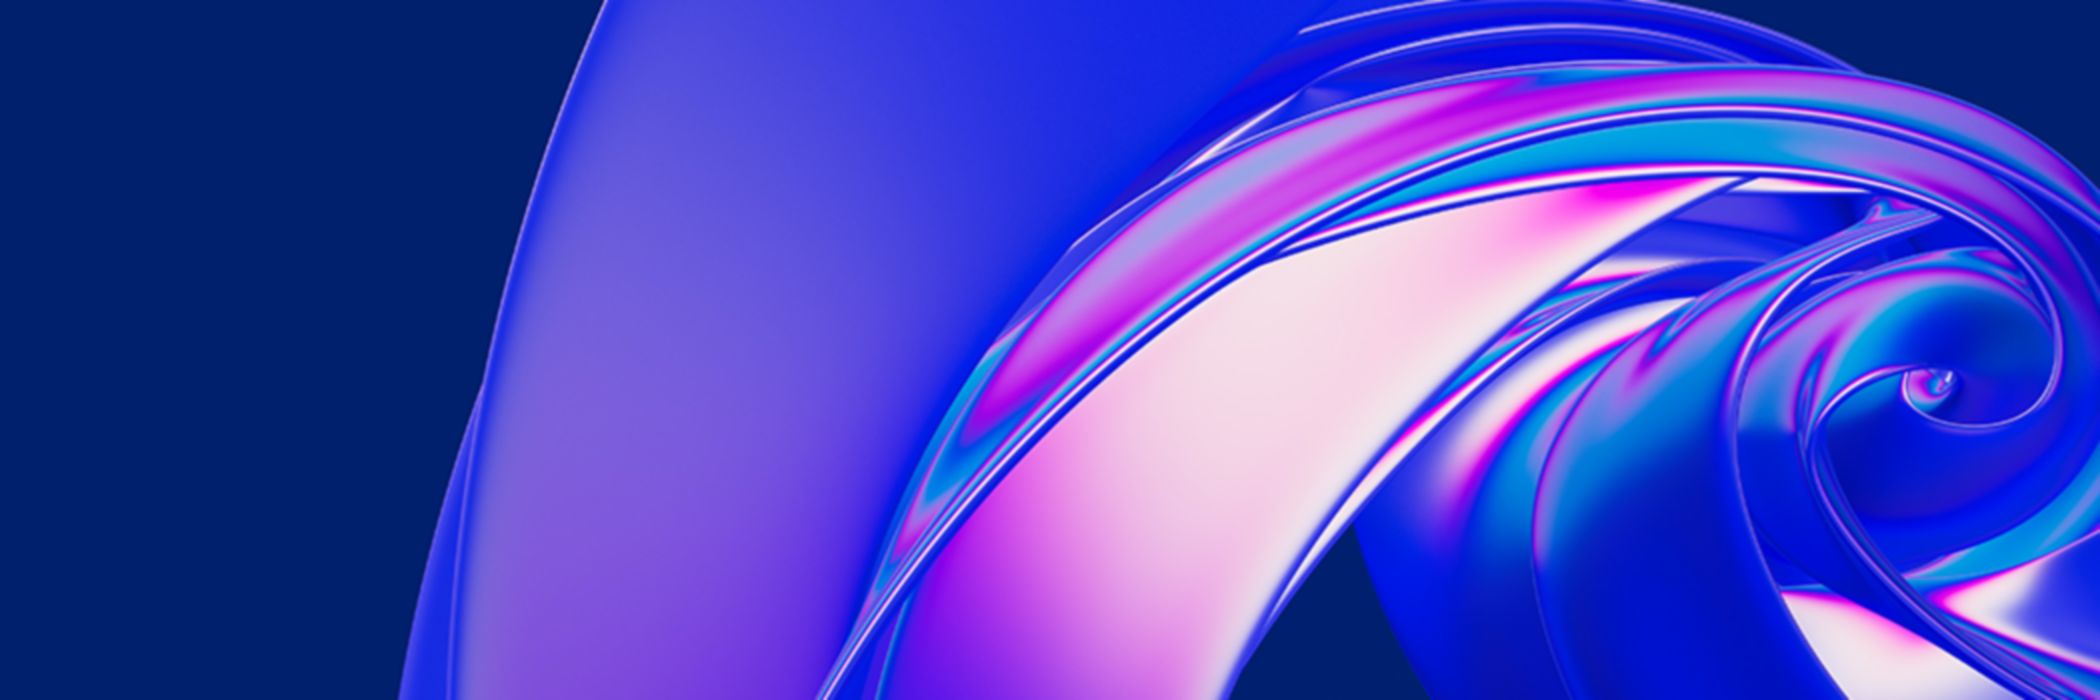 pink-blue-purple-image